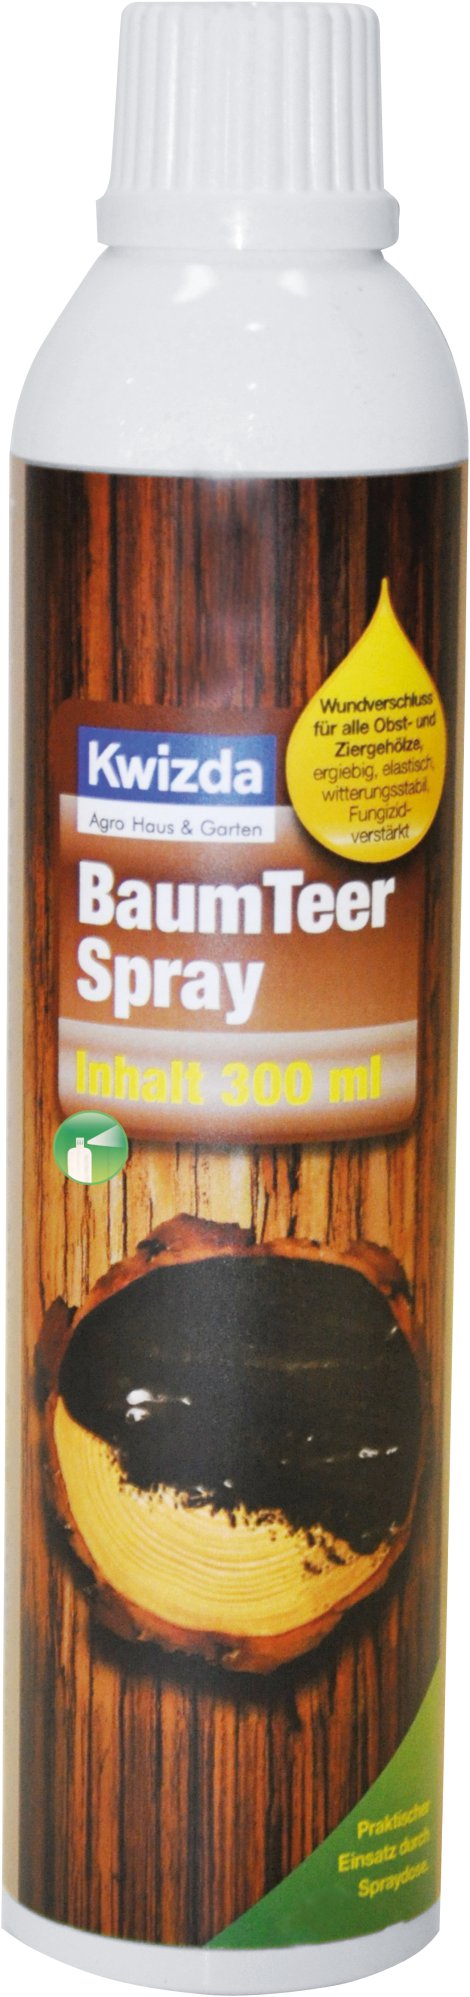 KWIZDA Baumteer-Spray 0,3 l